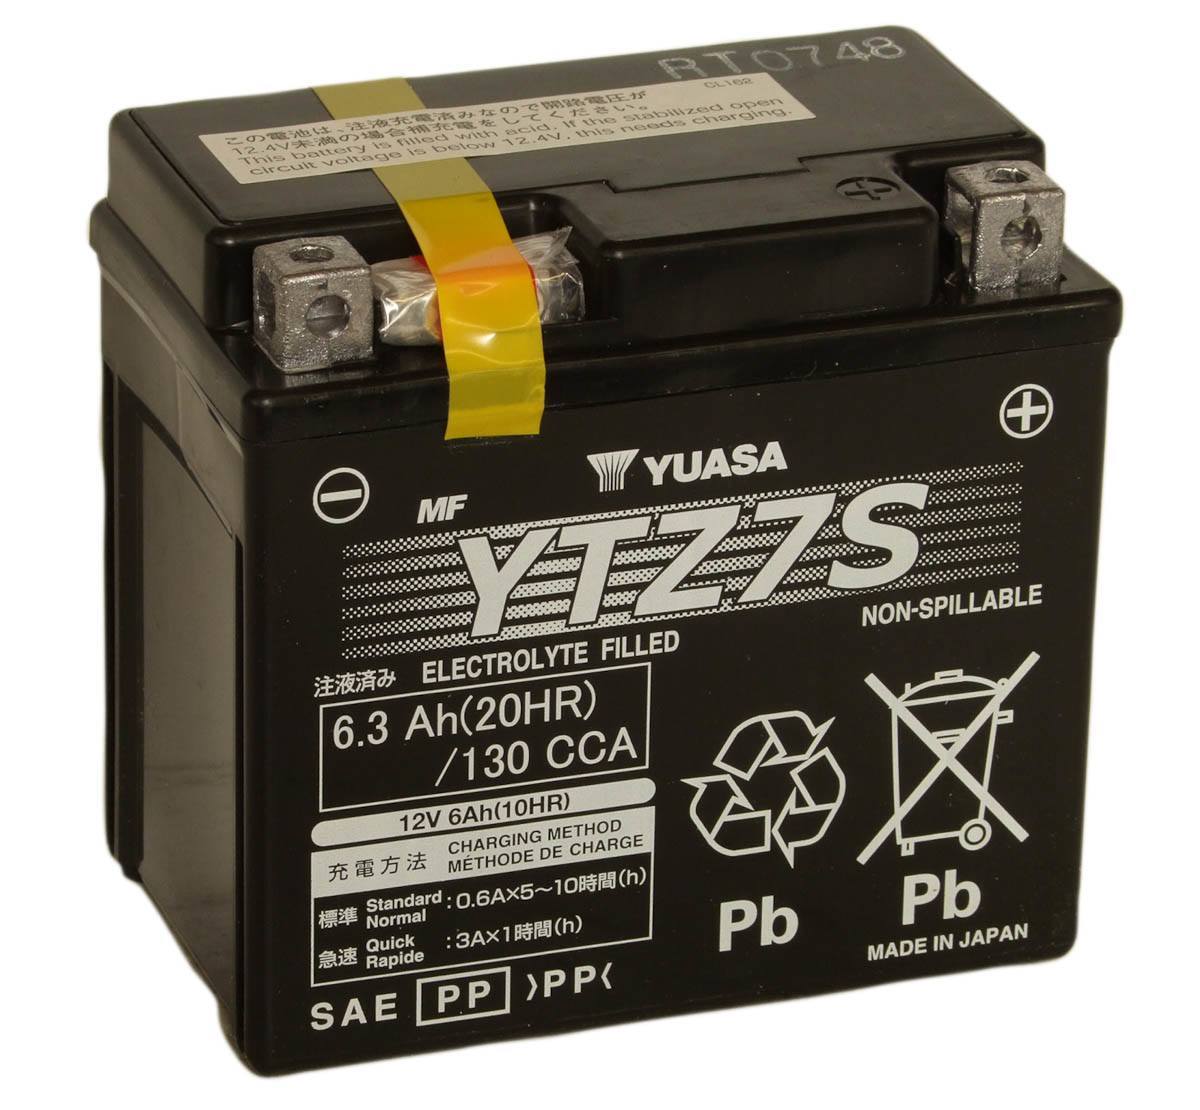 Yuasa YTZ7S Motorbike Battery